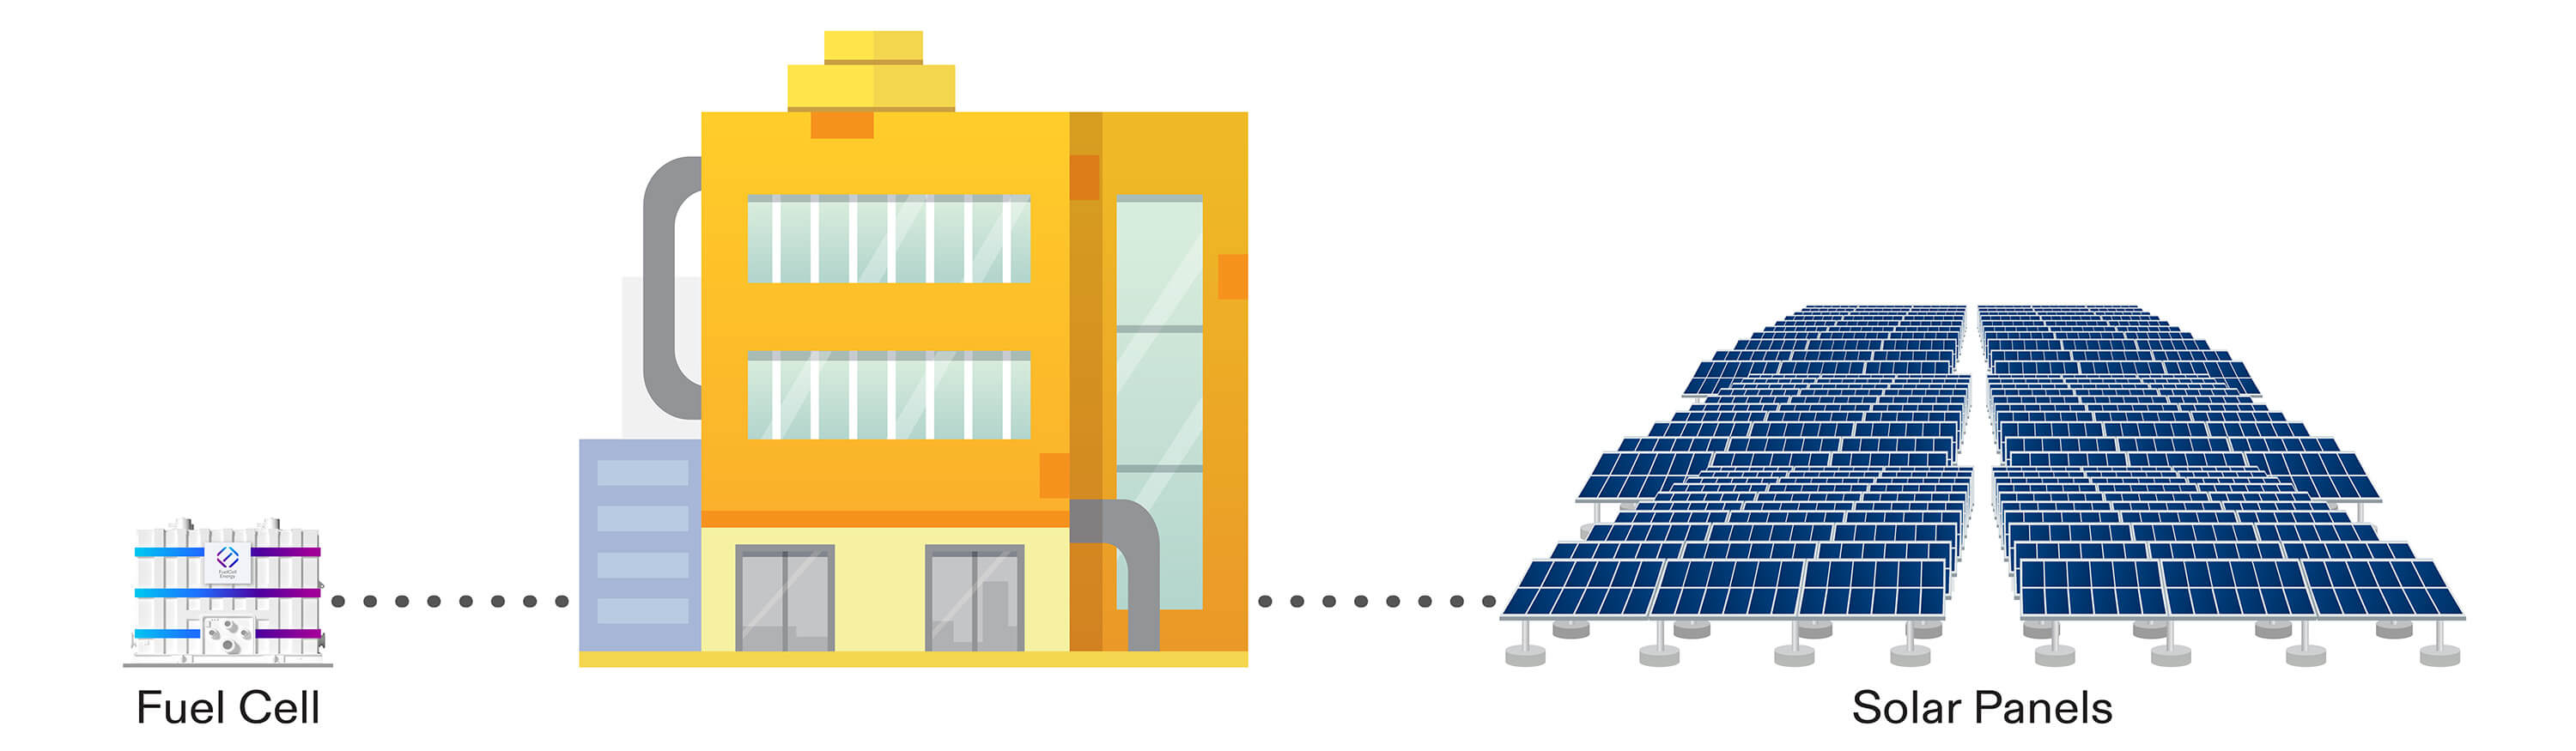 fuel-cell-benefits-solar-panels